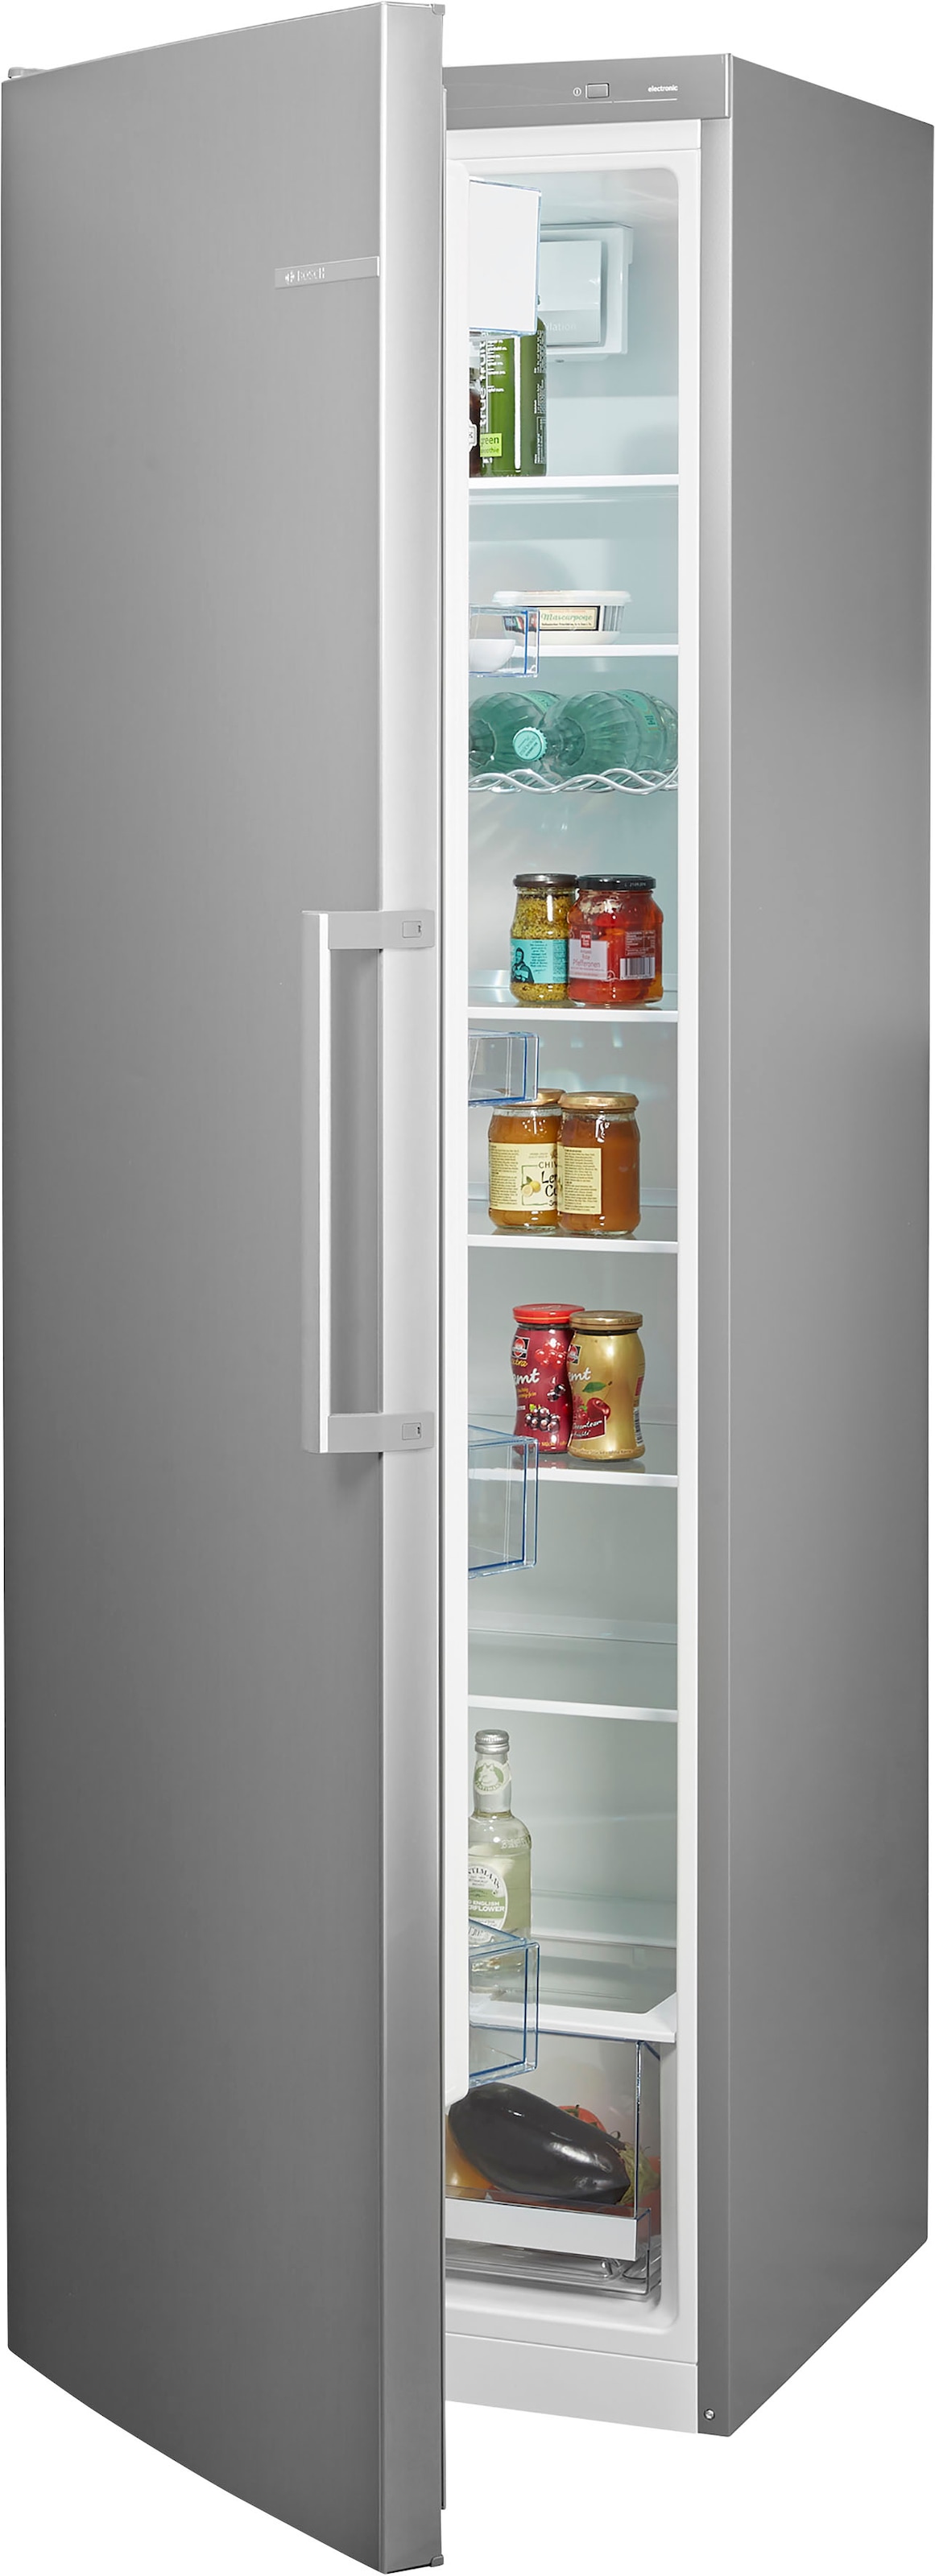 BOSCH Kühlschrank »KSV36VLDP«, KSV36VLDP, 186 cm hoch, 60 cm breit